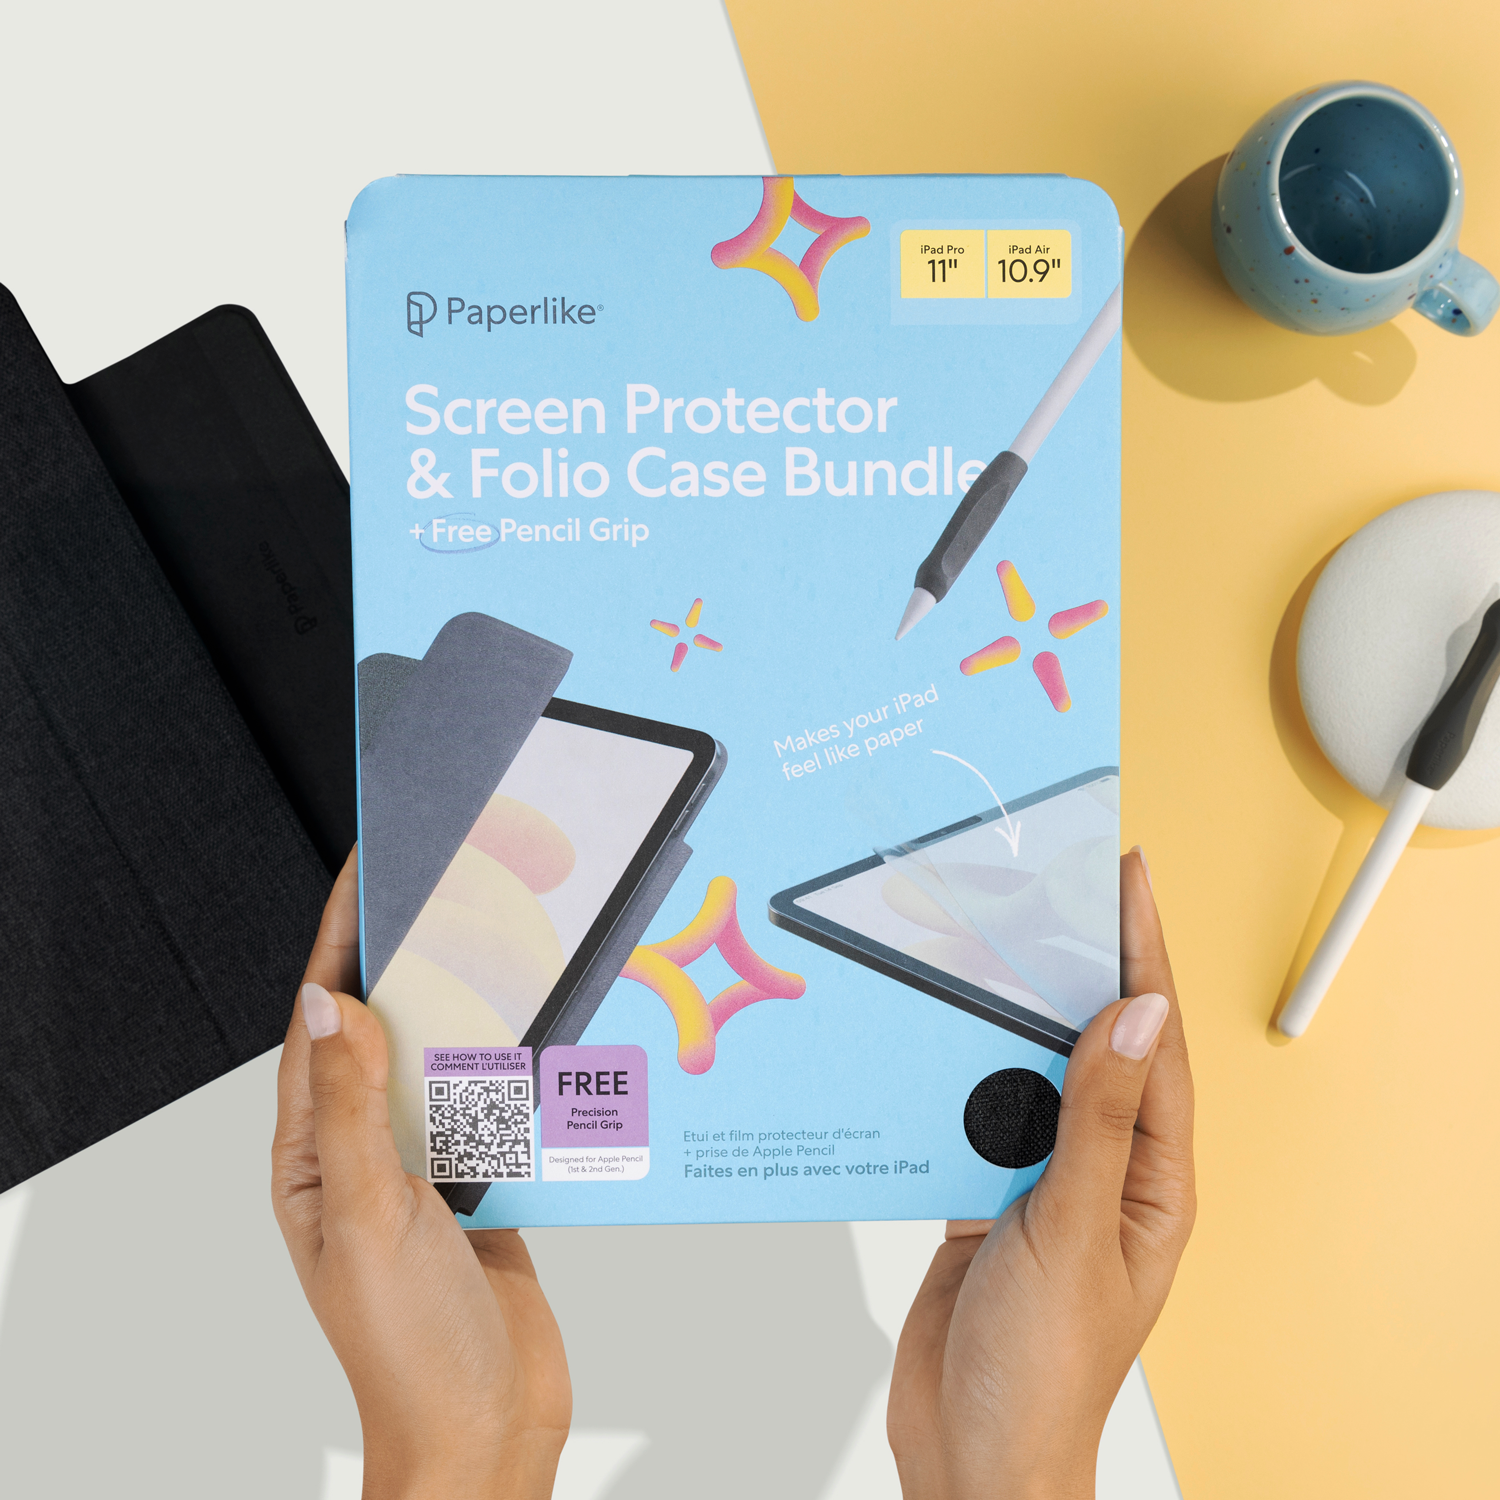 Paperlike Screen Protector + Folio Bundle - all-in-one professional iPad kit